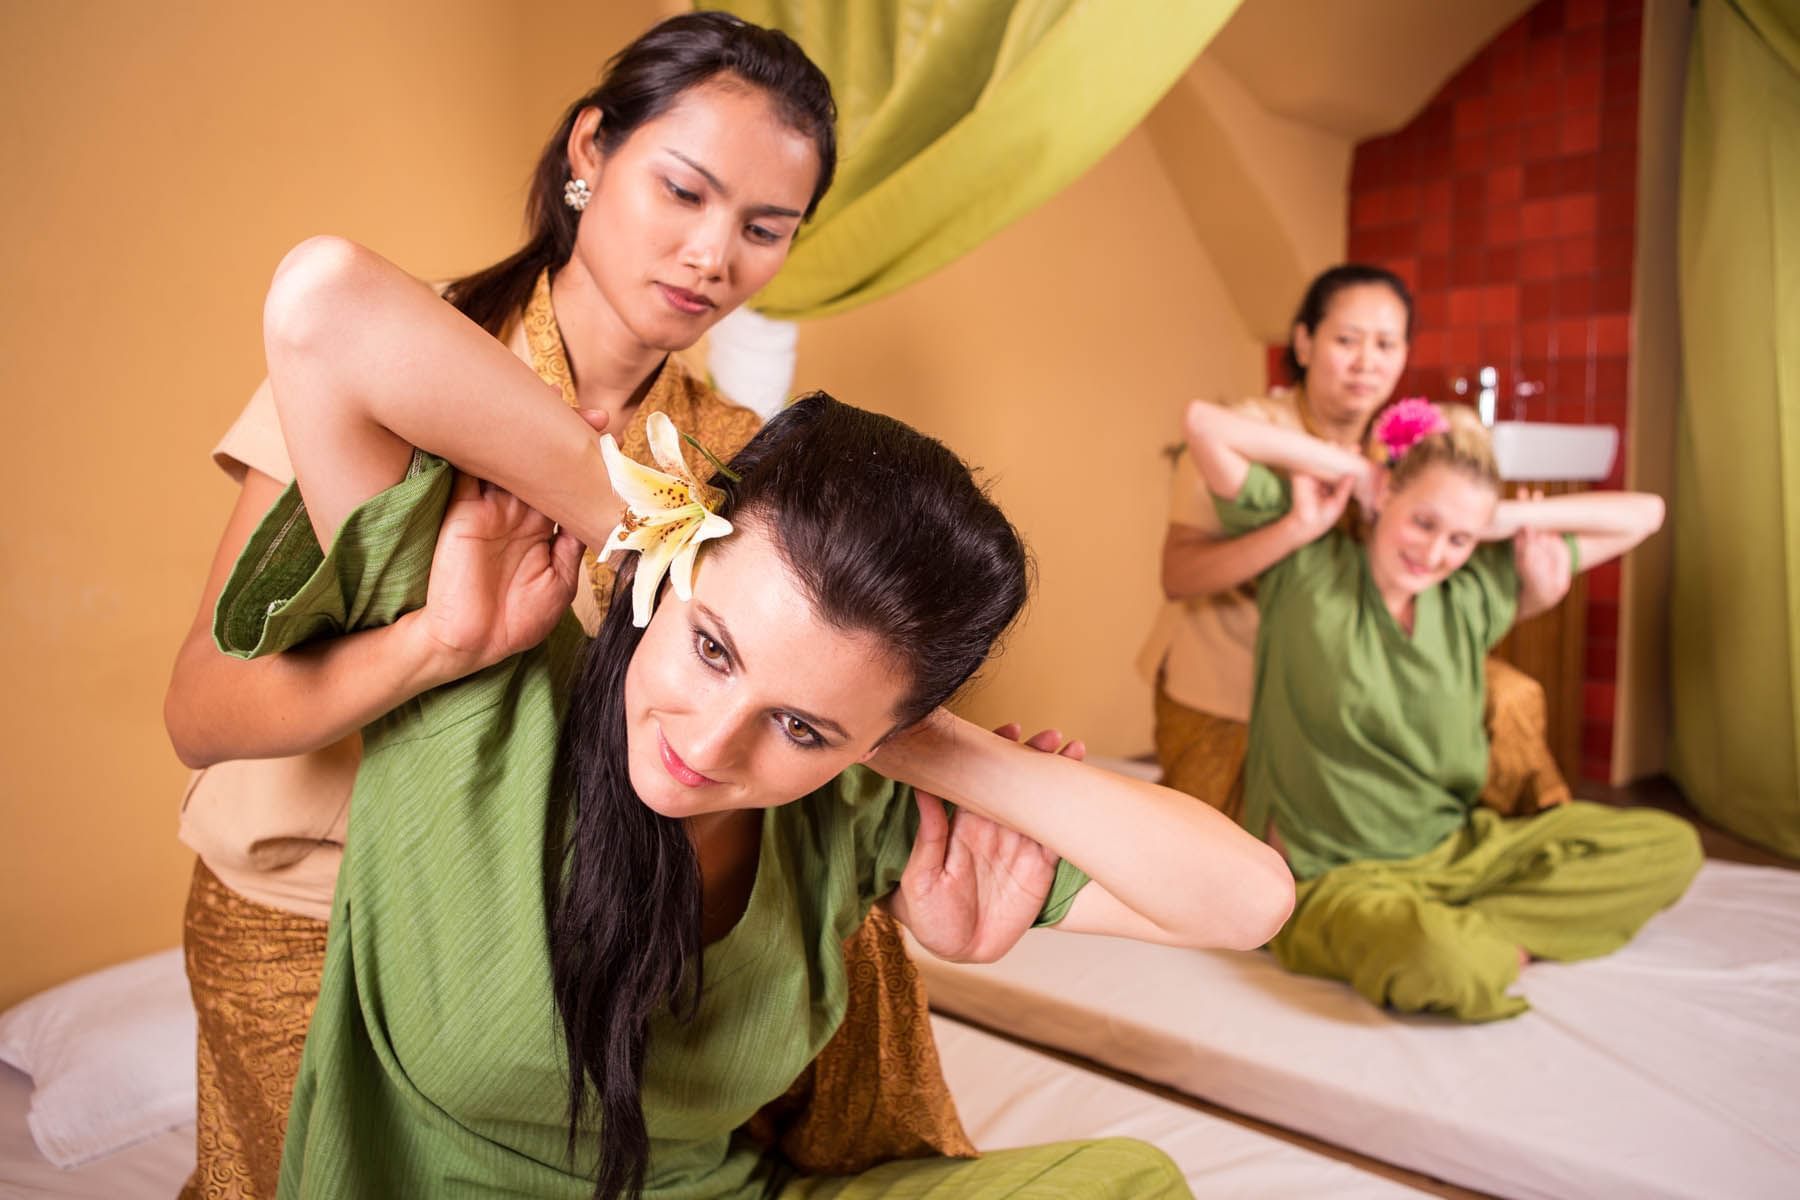 Traditional massage